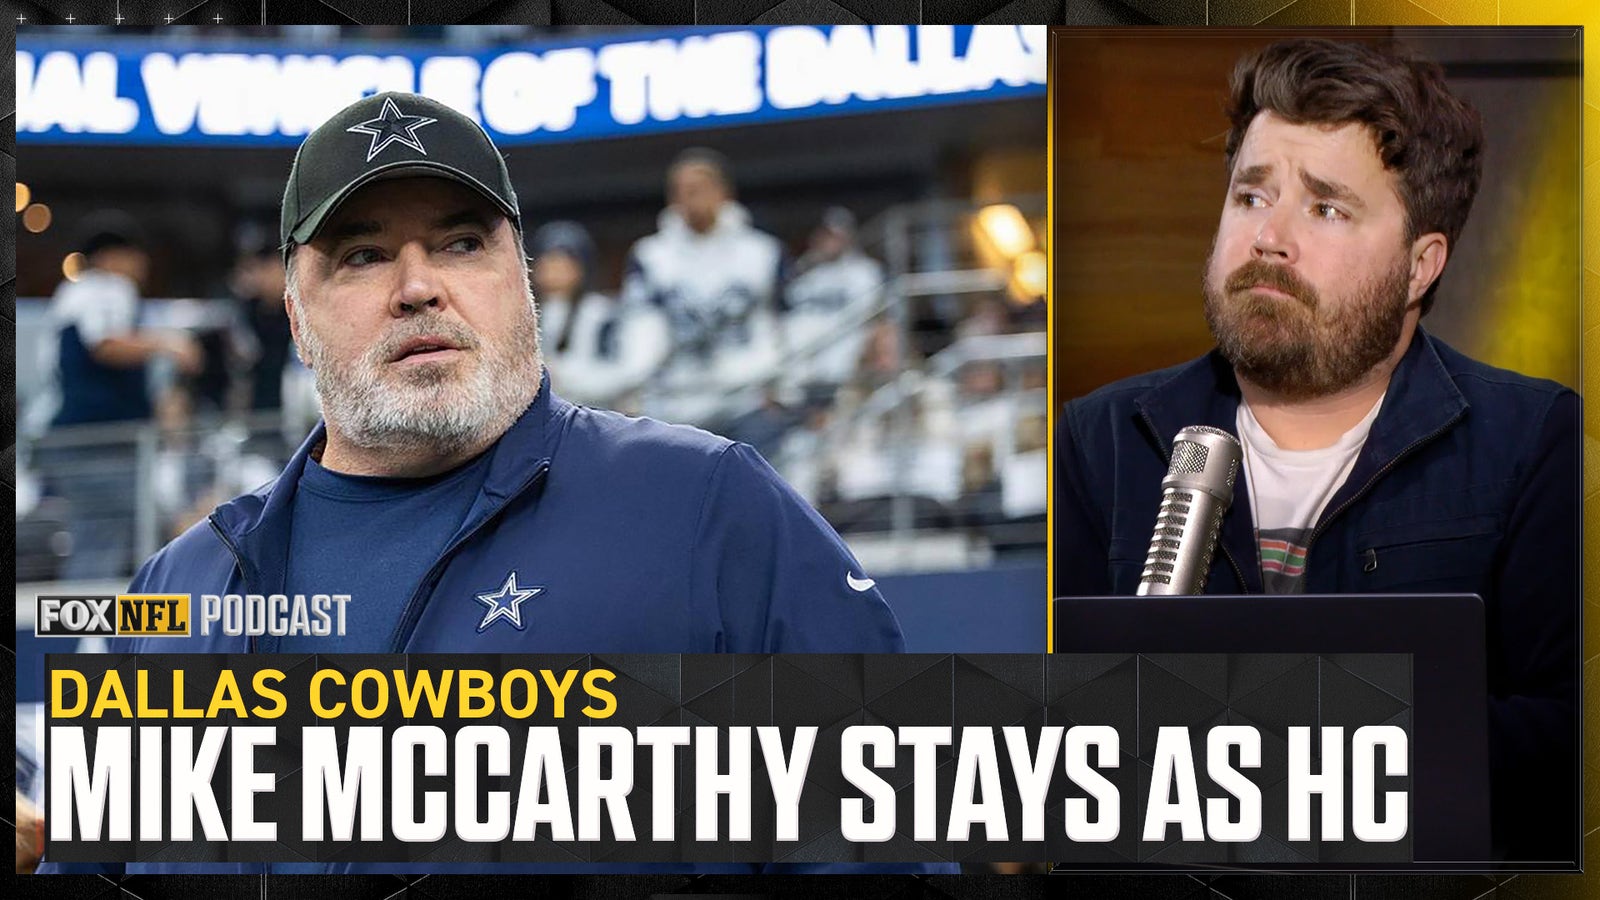 Mike McCarthy to remain as Dallas Cowboys head coach - Dave Helman reacts